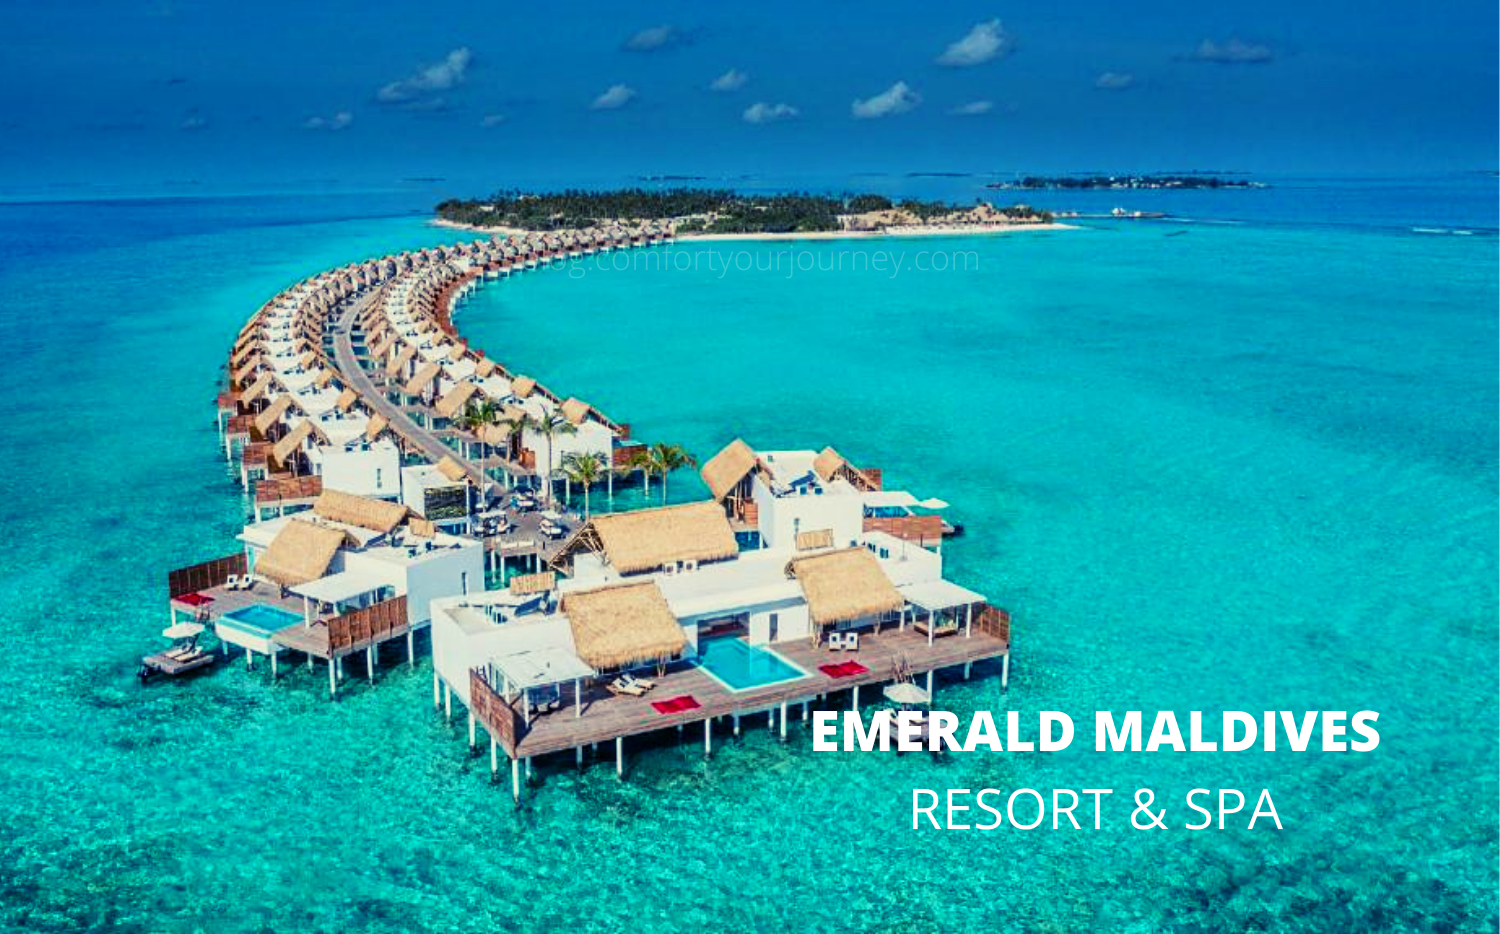 EMERALD MALDIVES RESORT & SPA